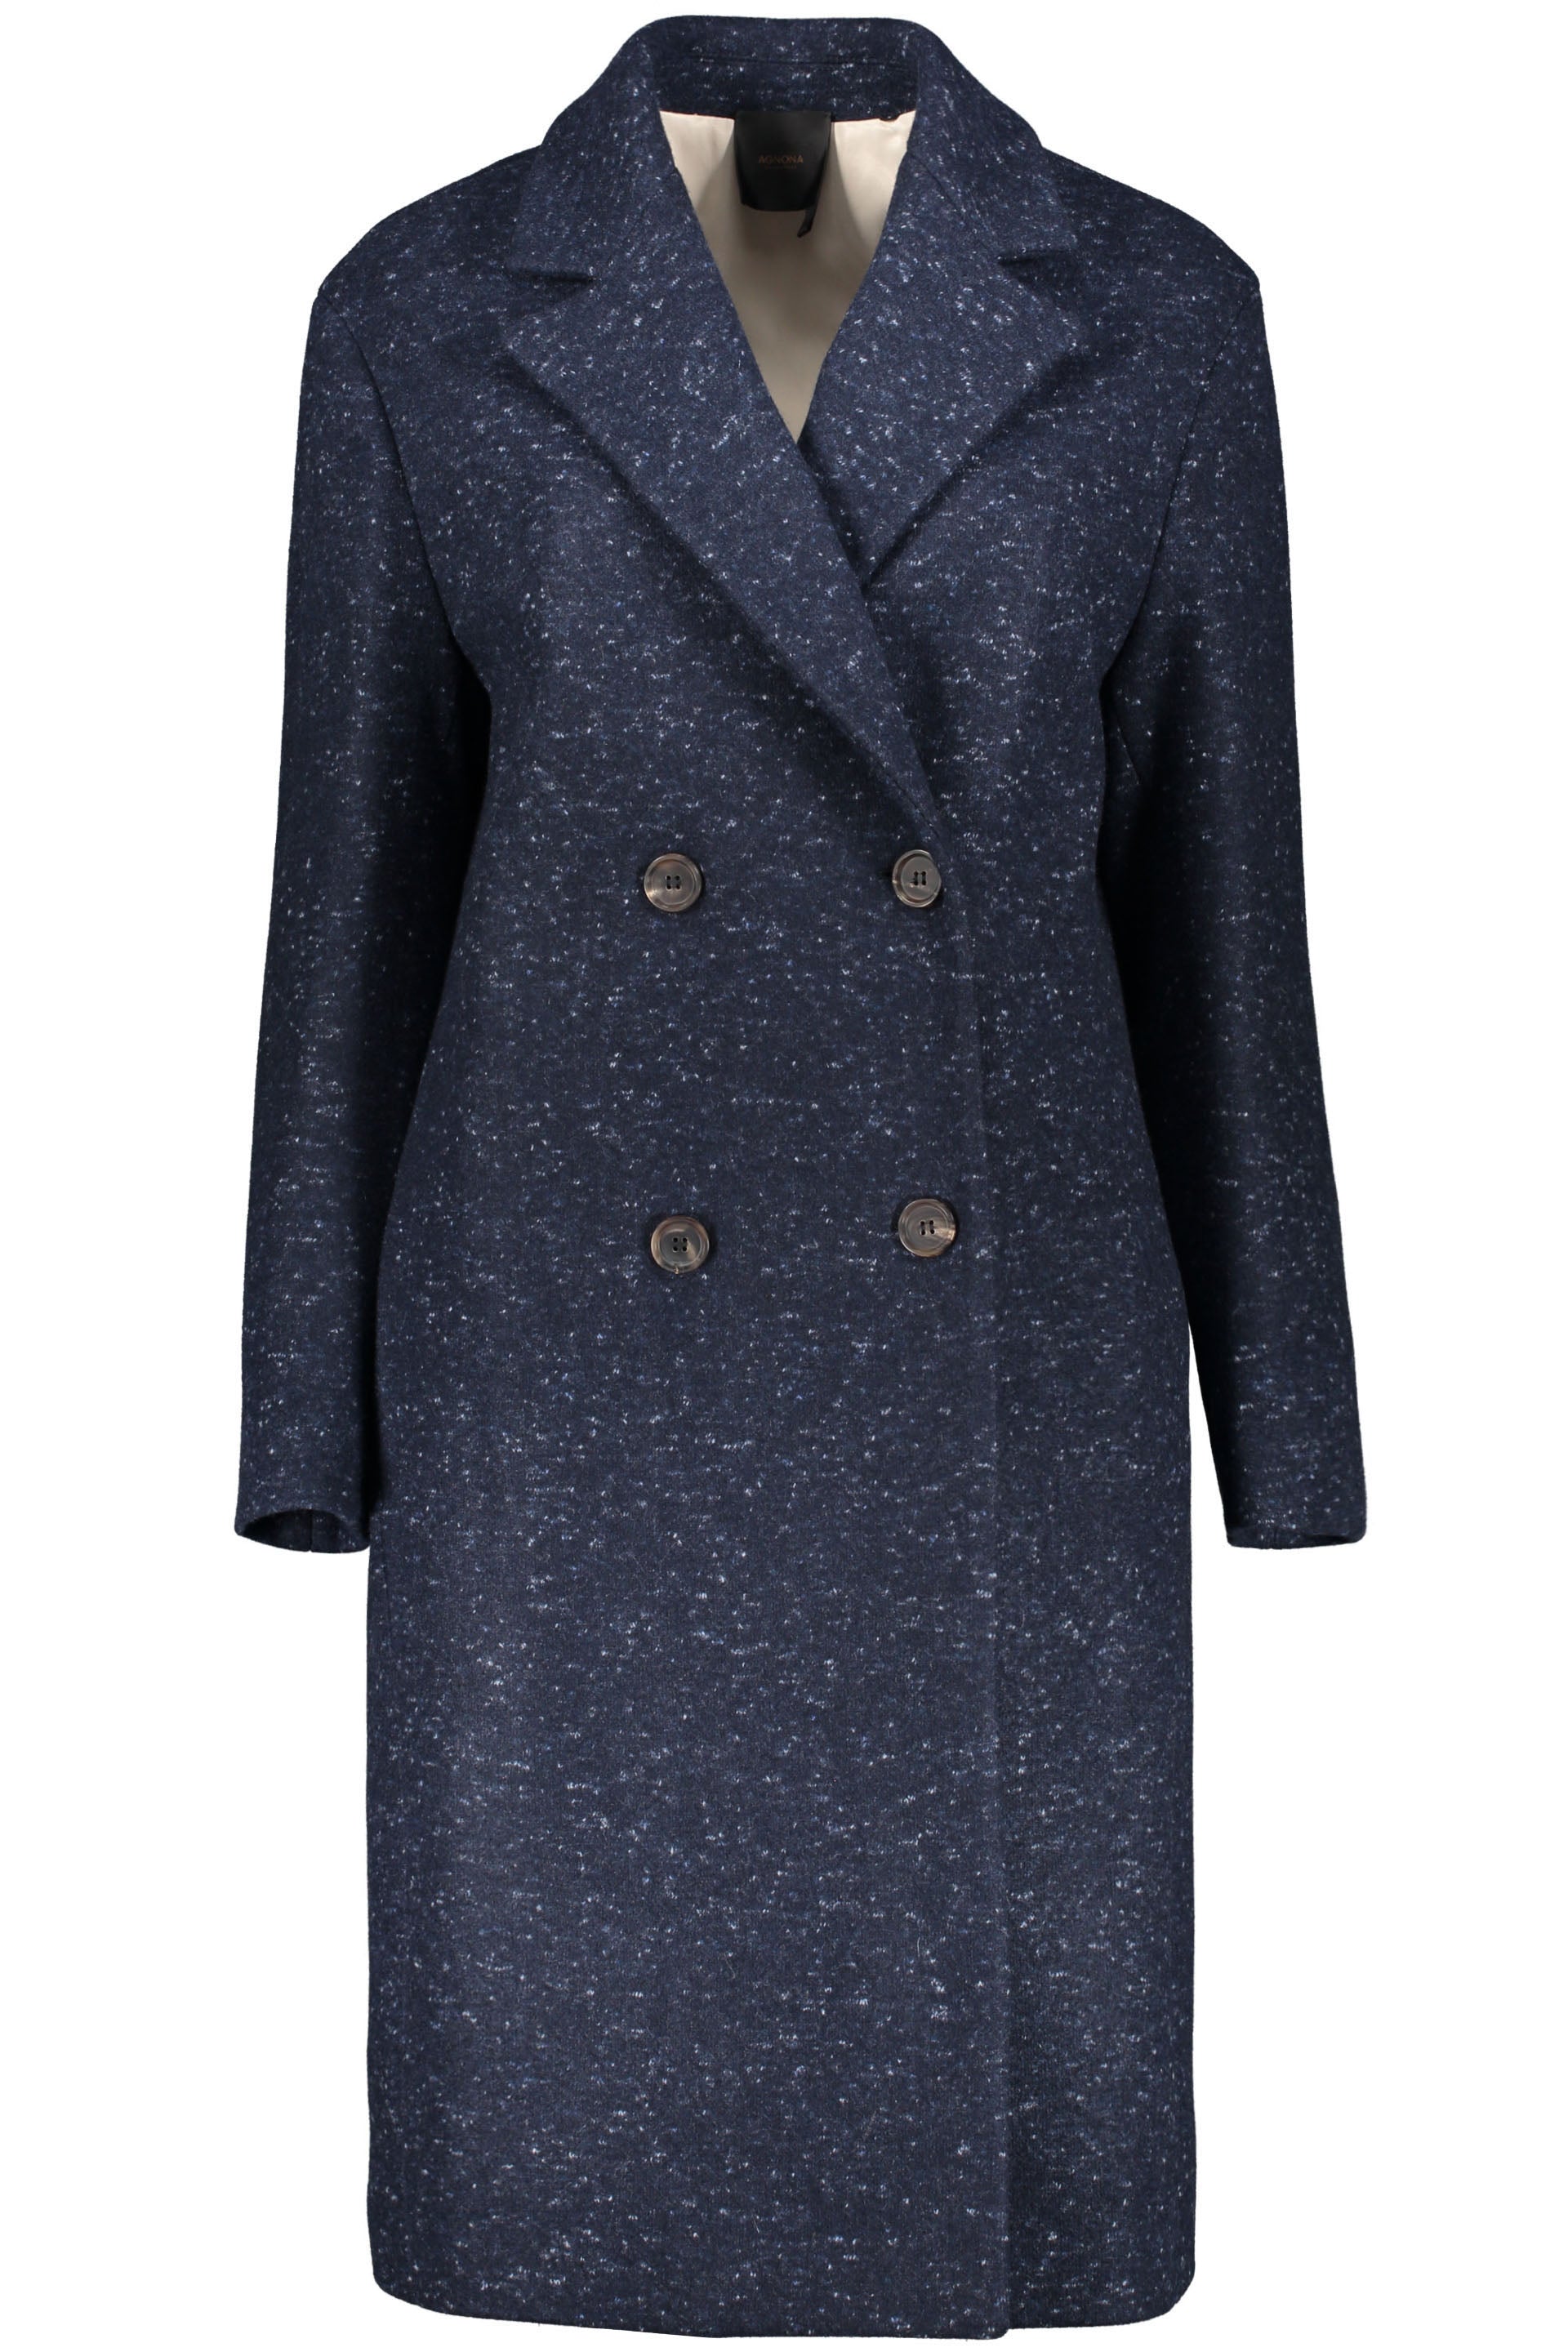 Agnona-OUTLET-SALE-Double-breasted-cashmere-coat-Jacken-Mantel-ARCHIVE-COLLECTION-2.jpg